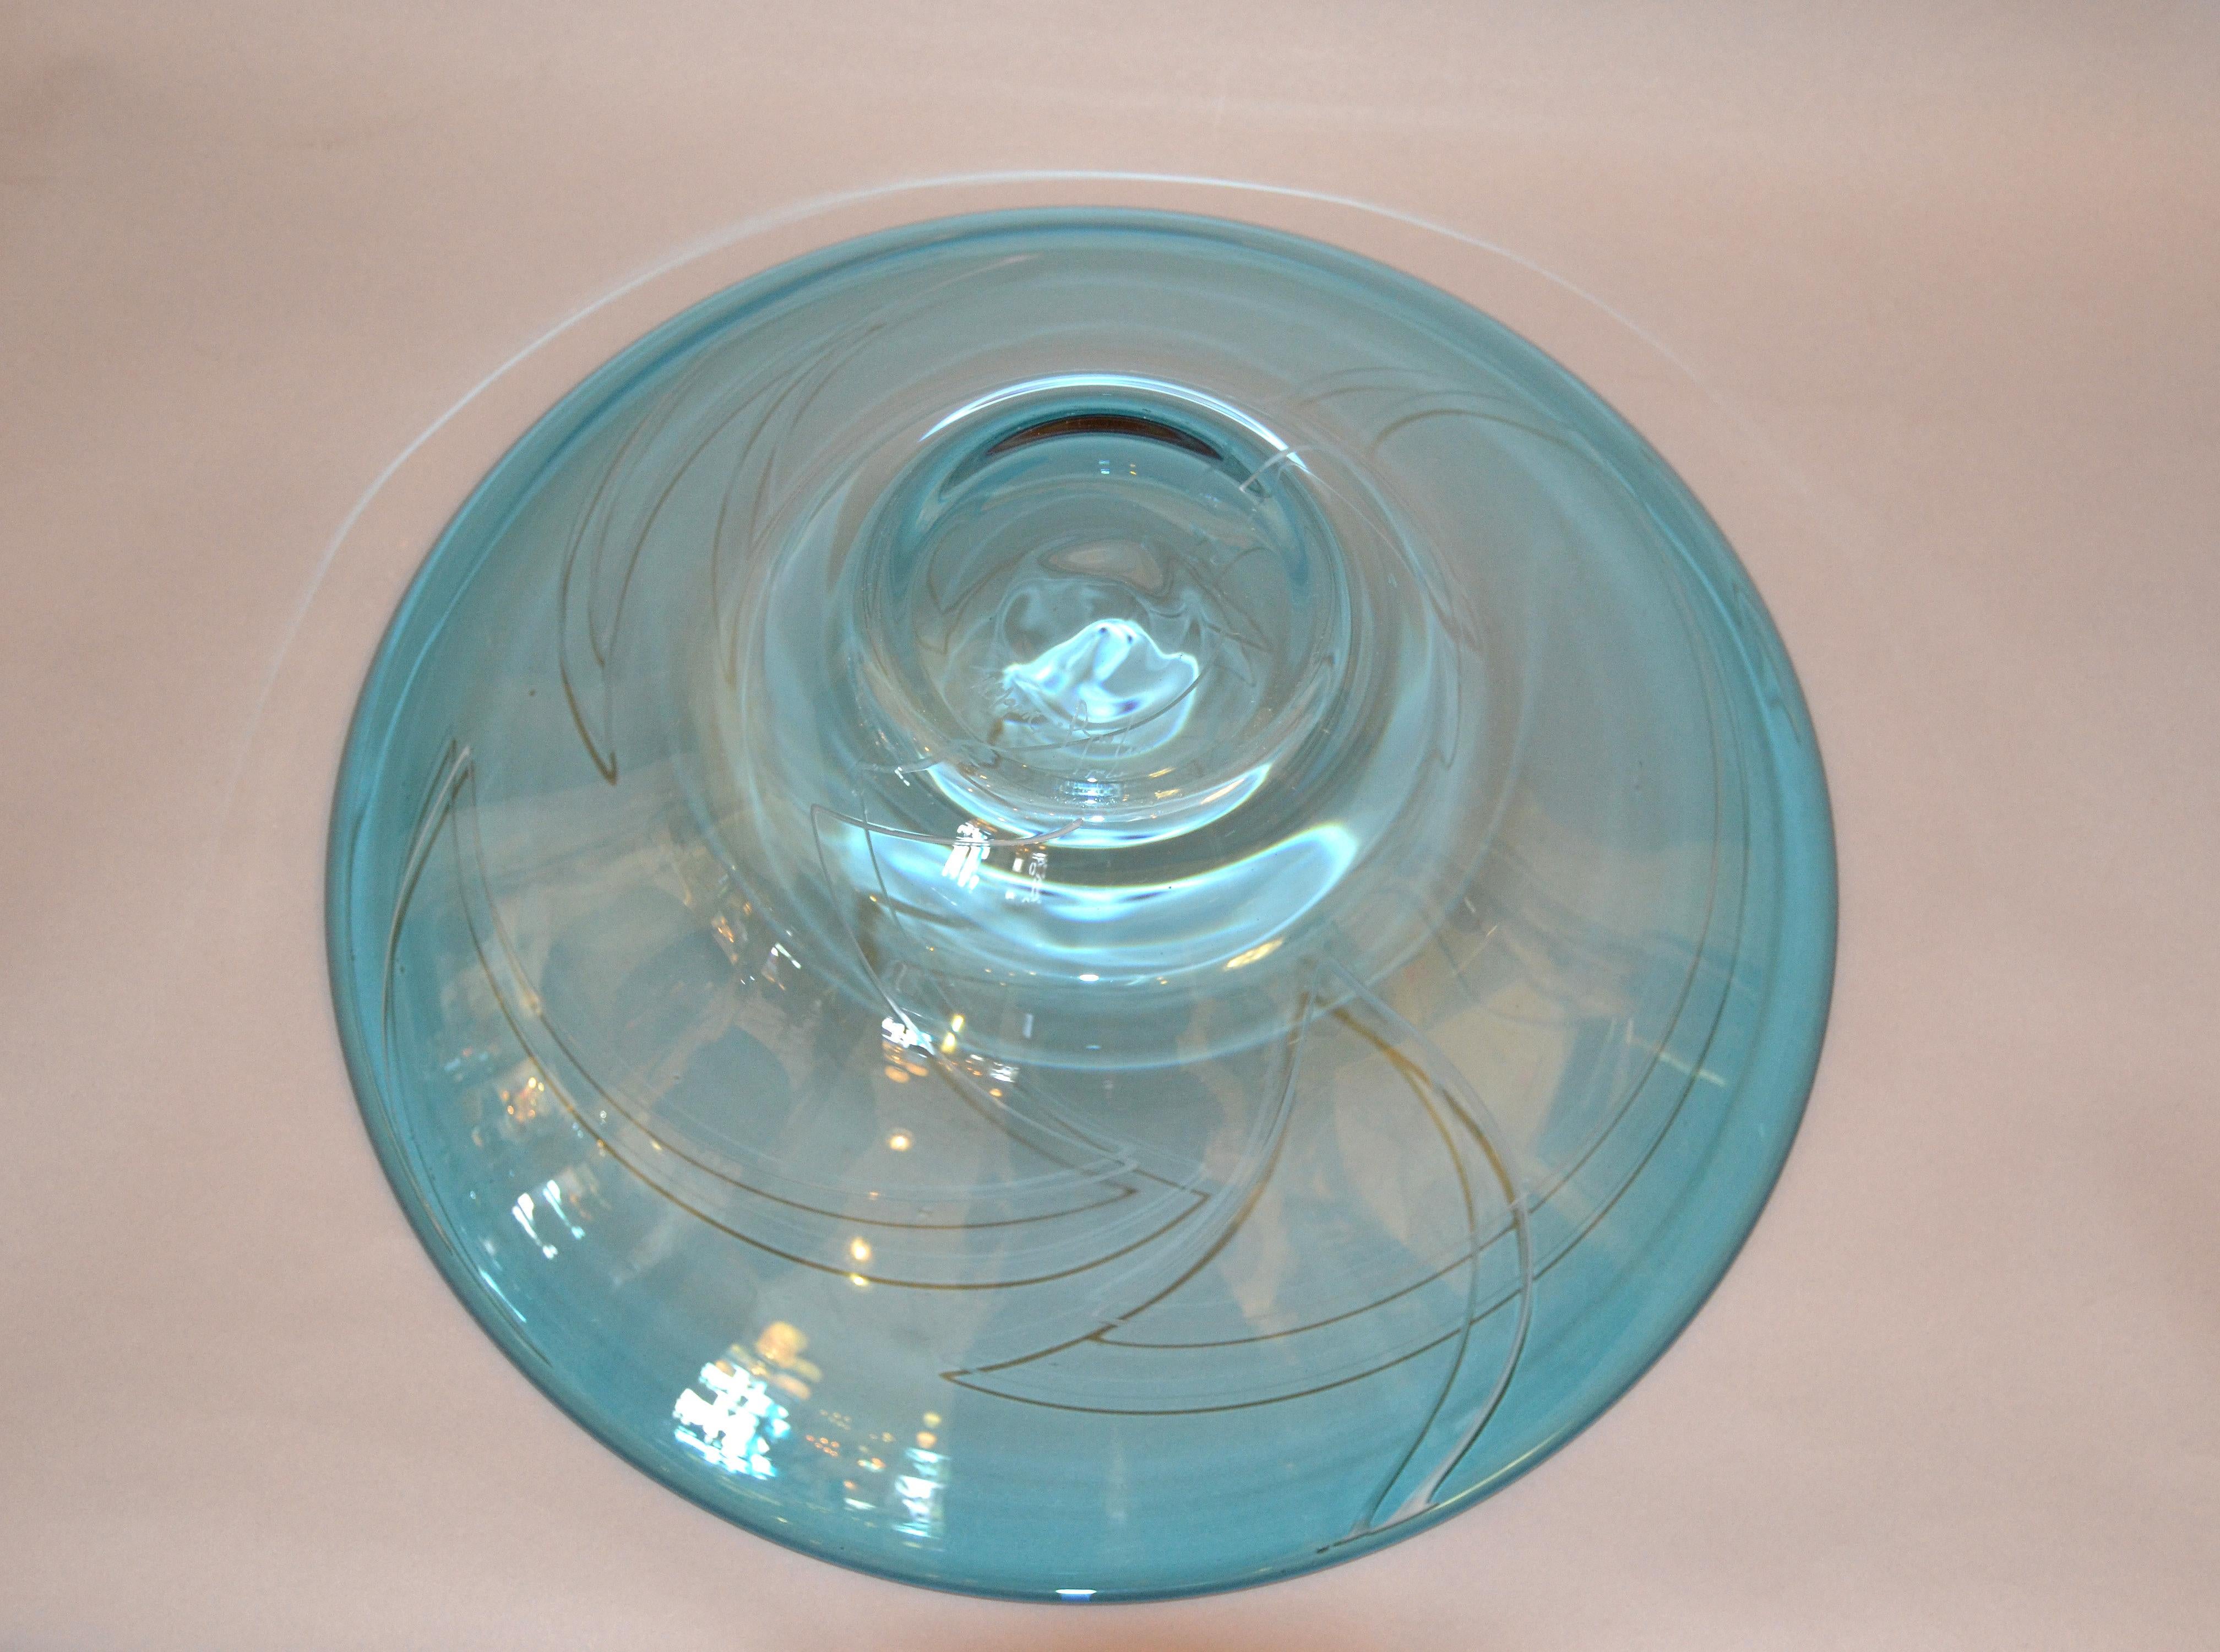 Hand-Crafted Modern Blue Art Glass Centerpiece, Bowl by Mark J. Sudduth, Studiopiece For Sale